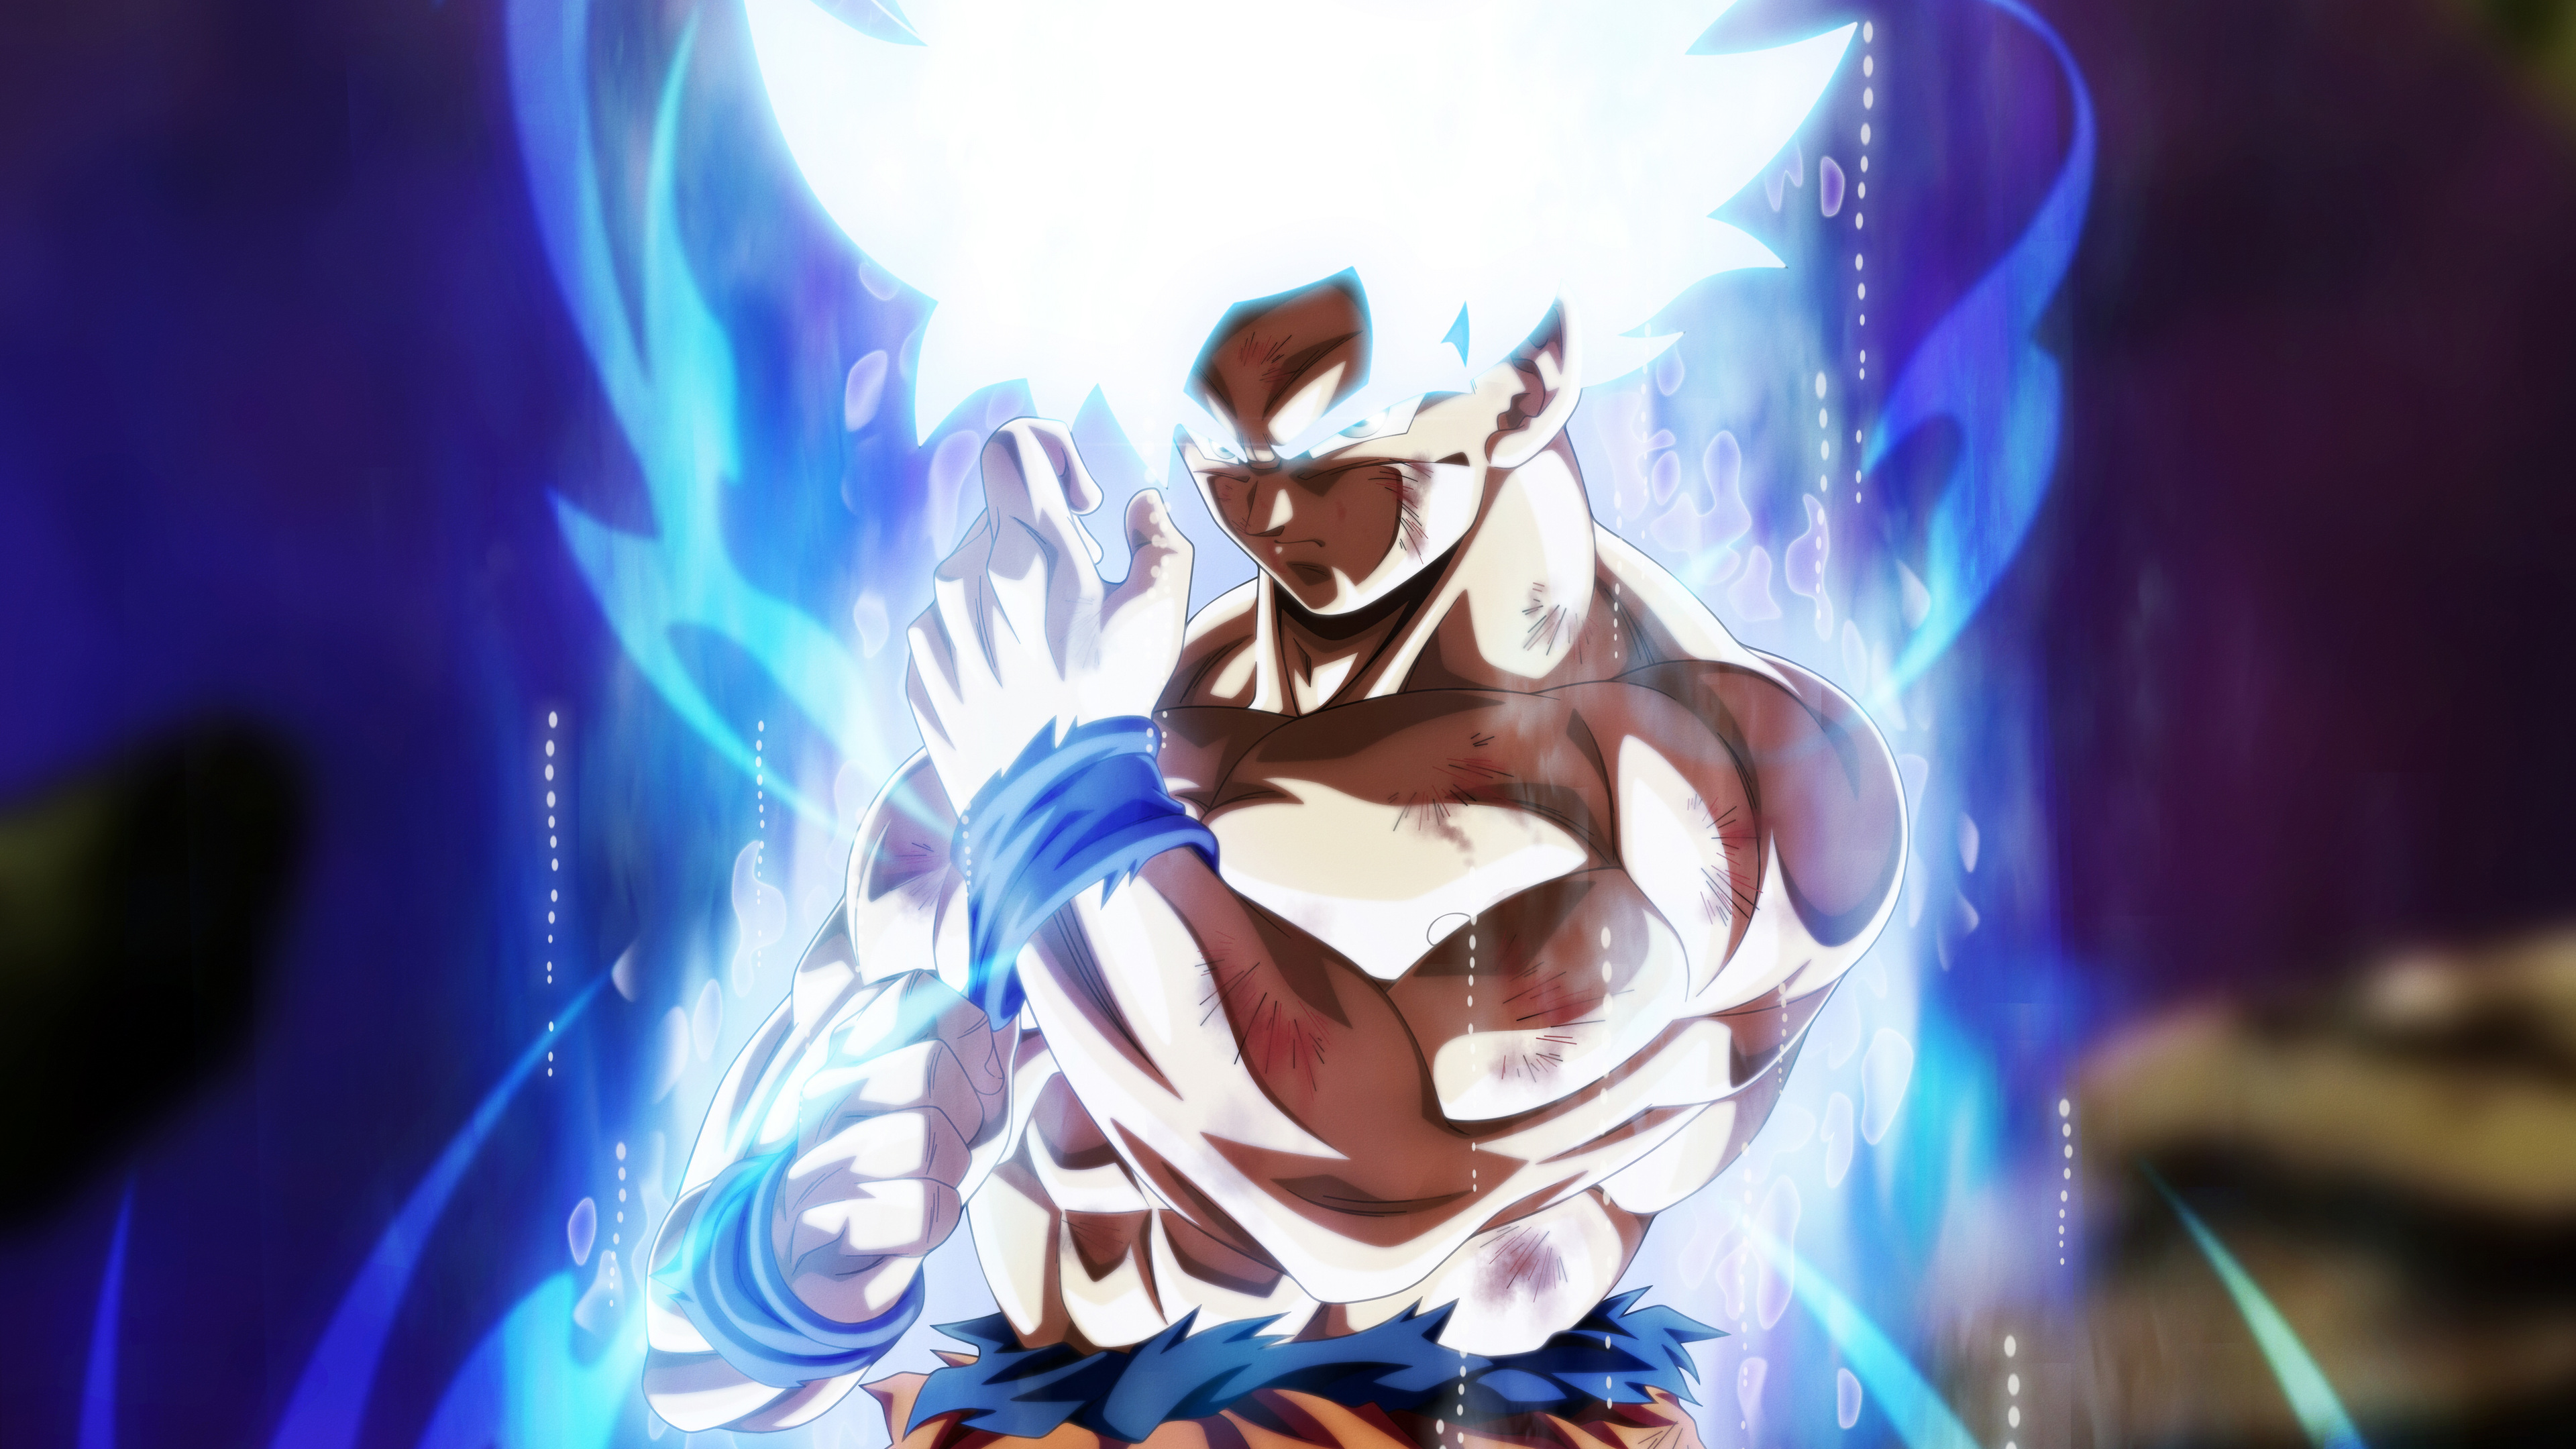 Wallpaper 4k Goku Dragon Ball Super Anime 4k Fan Made 4k 3840x2160